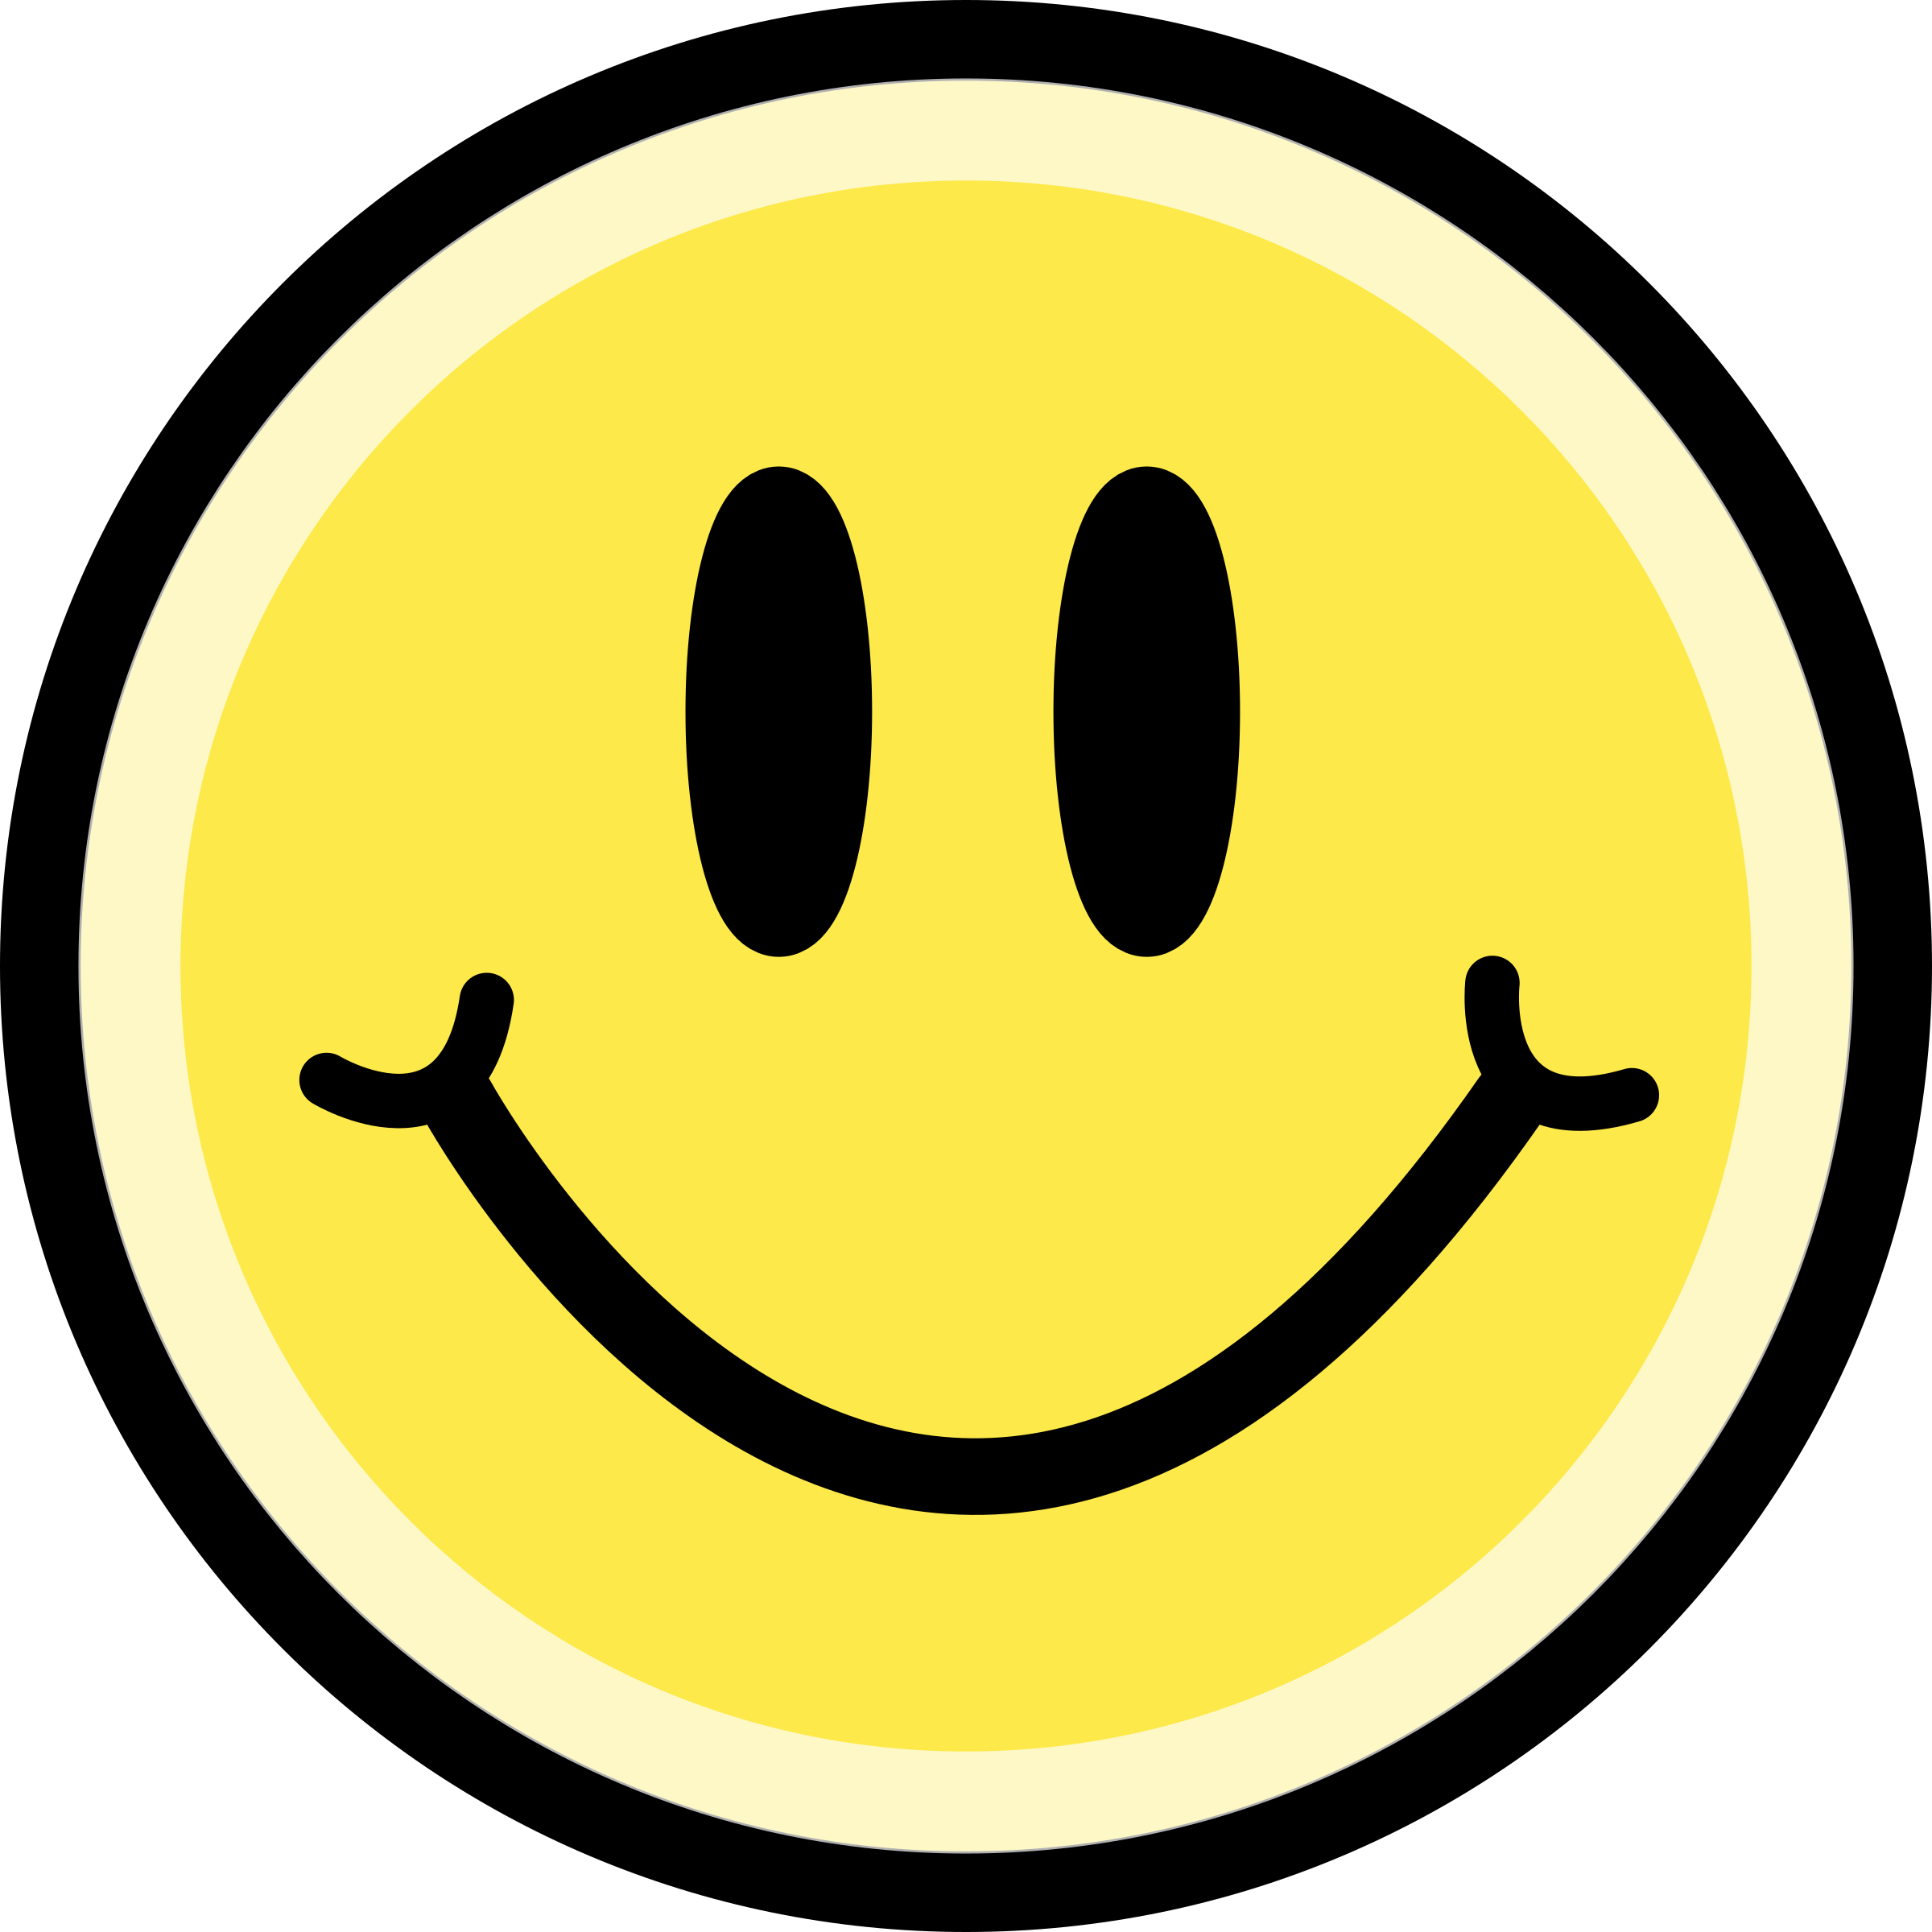 Big Image (Png) - Smiling Face, Transparent background PNG HD thumbnail